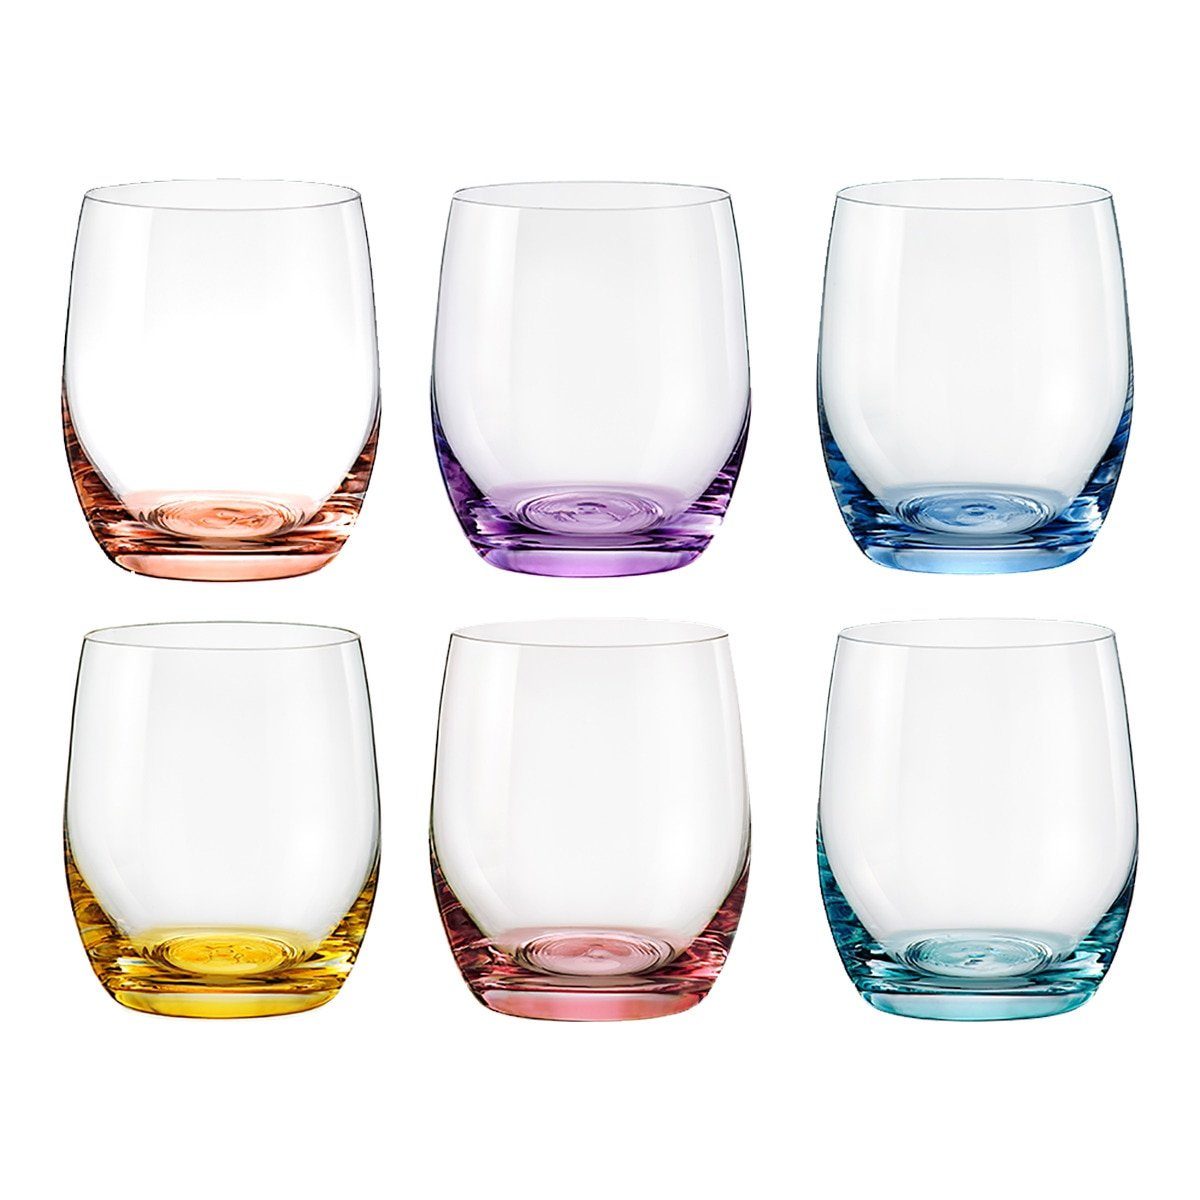 Crystalex Becher Wassergläser Whiskygläser Model Spectrum 300 ml 6er Set, Kristallin, mehrfarbig, 6er Set, Kristallglas